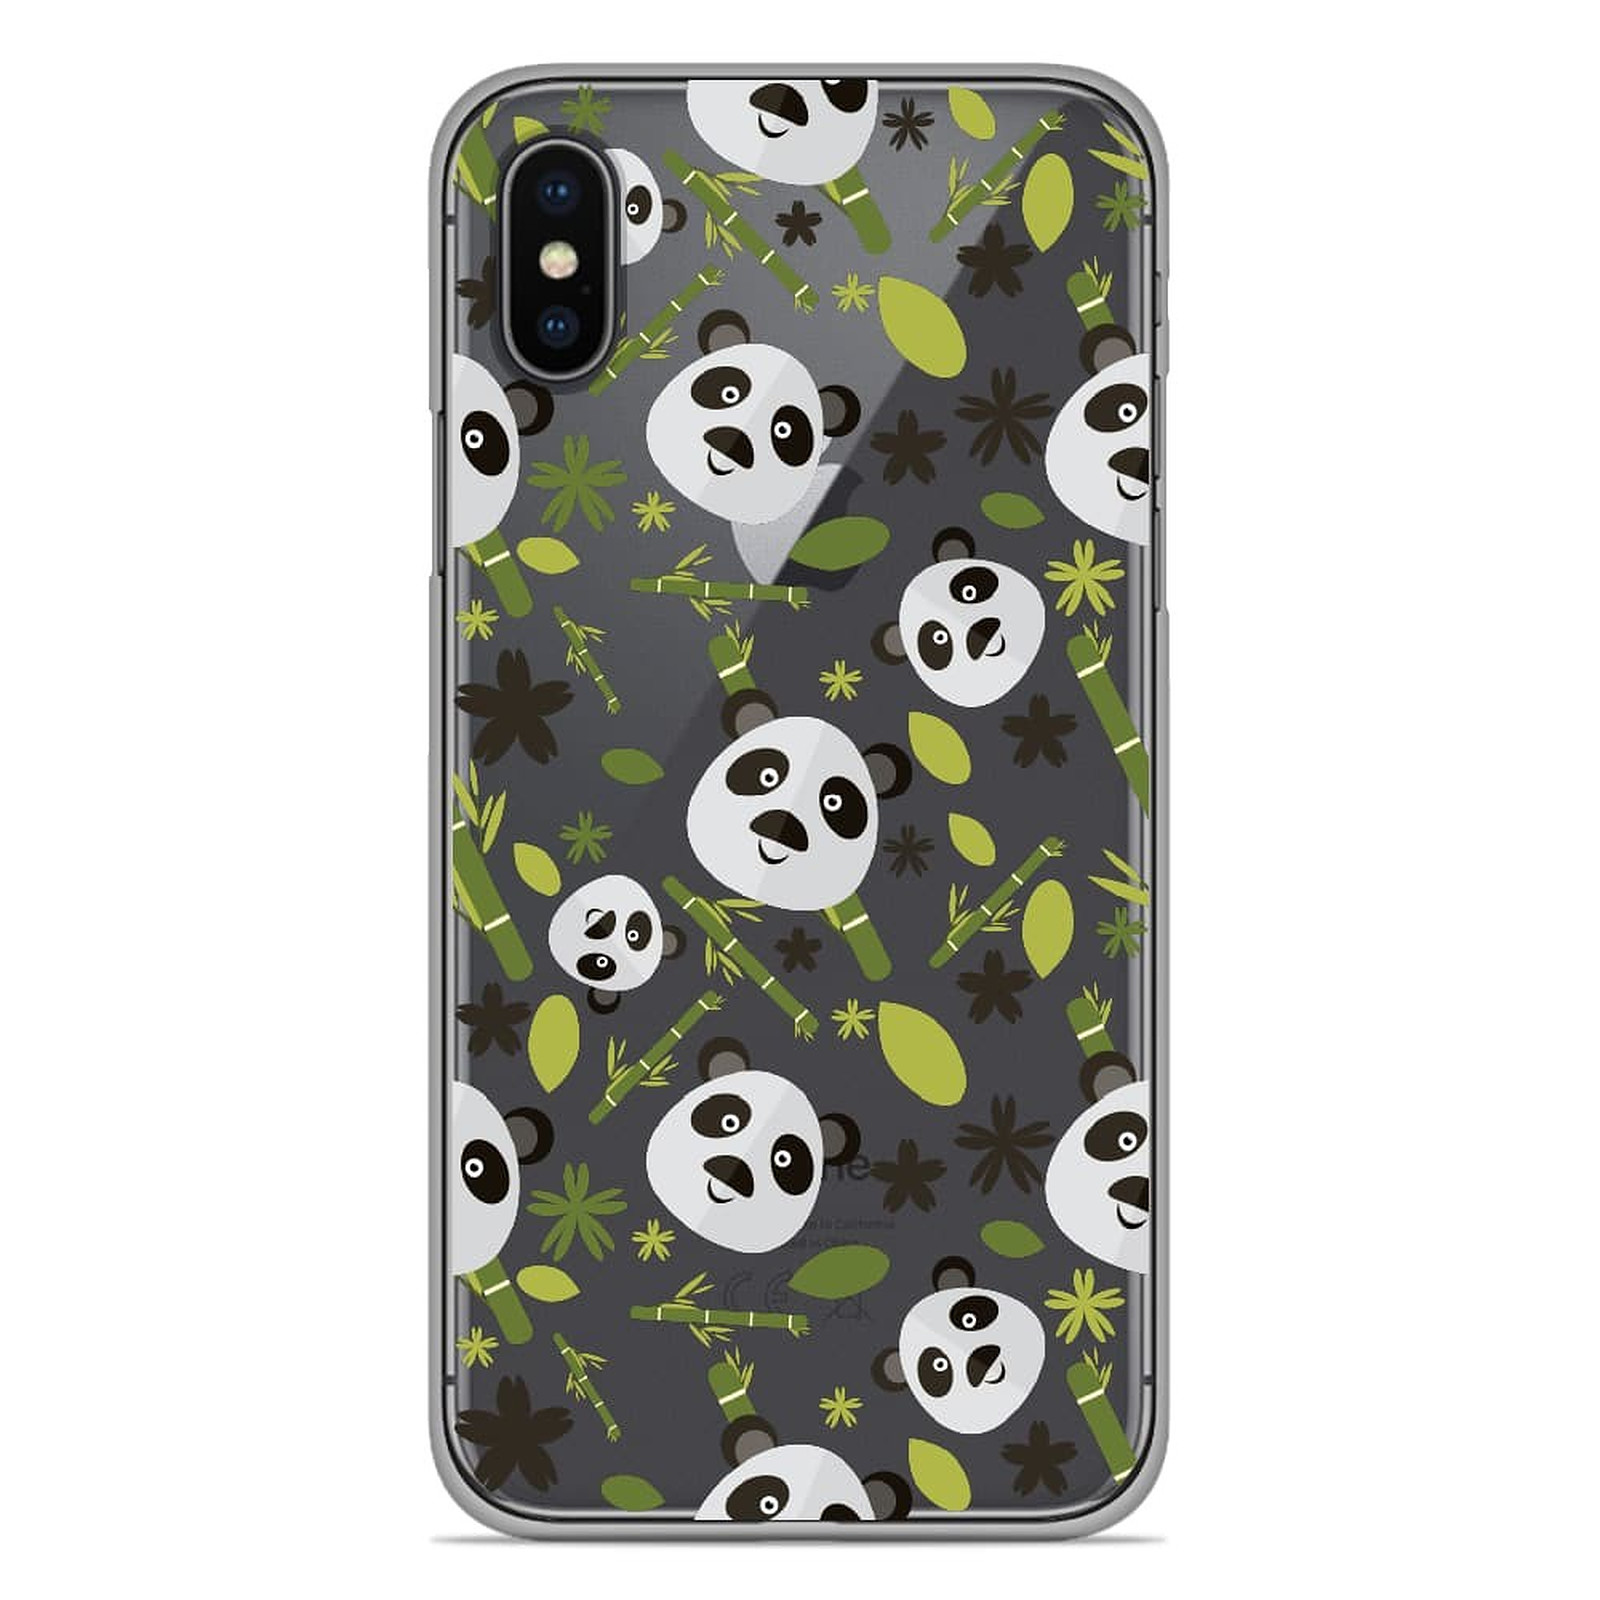 1001 Coques Coque silicone gel Apple iPhone XS Max motif Pandas et Bambou - Coque telephone 1001Coques